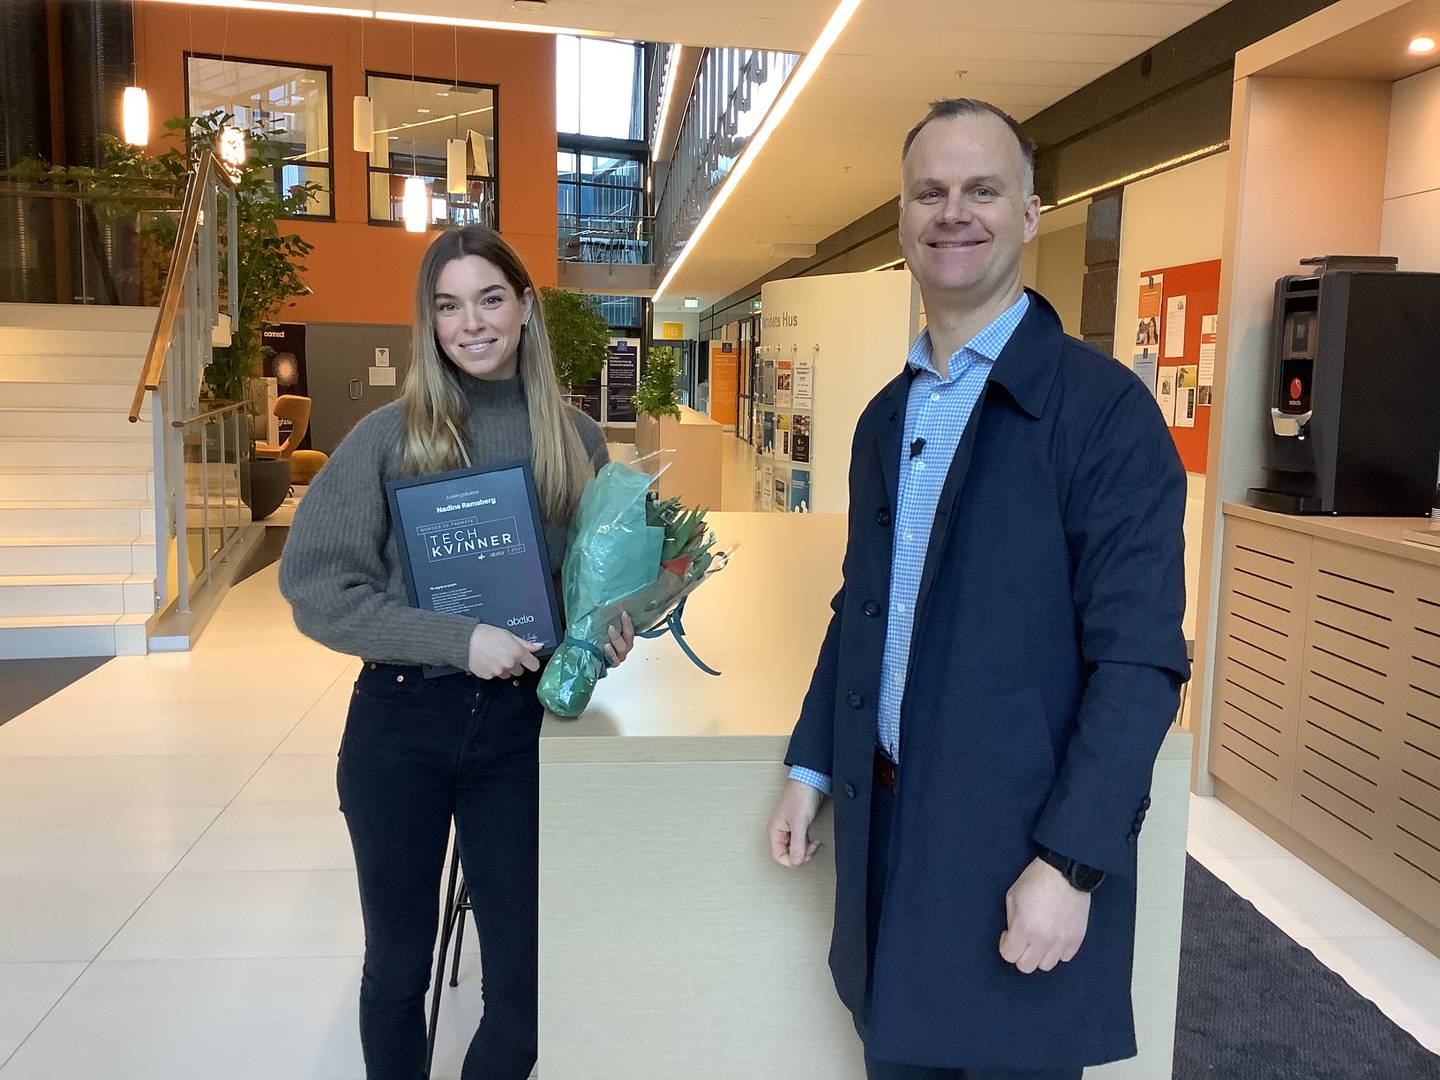 En fornøyd regiondirektør for Webstep i Stavanger, Geir Jåthun Hindenes, overrekker Nadine Ramsberg både diplom og blomster, som tegn på at hun er blant Norges fremste tech-kvinner.